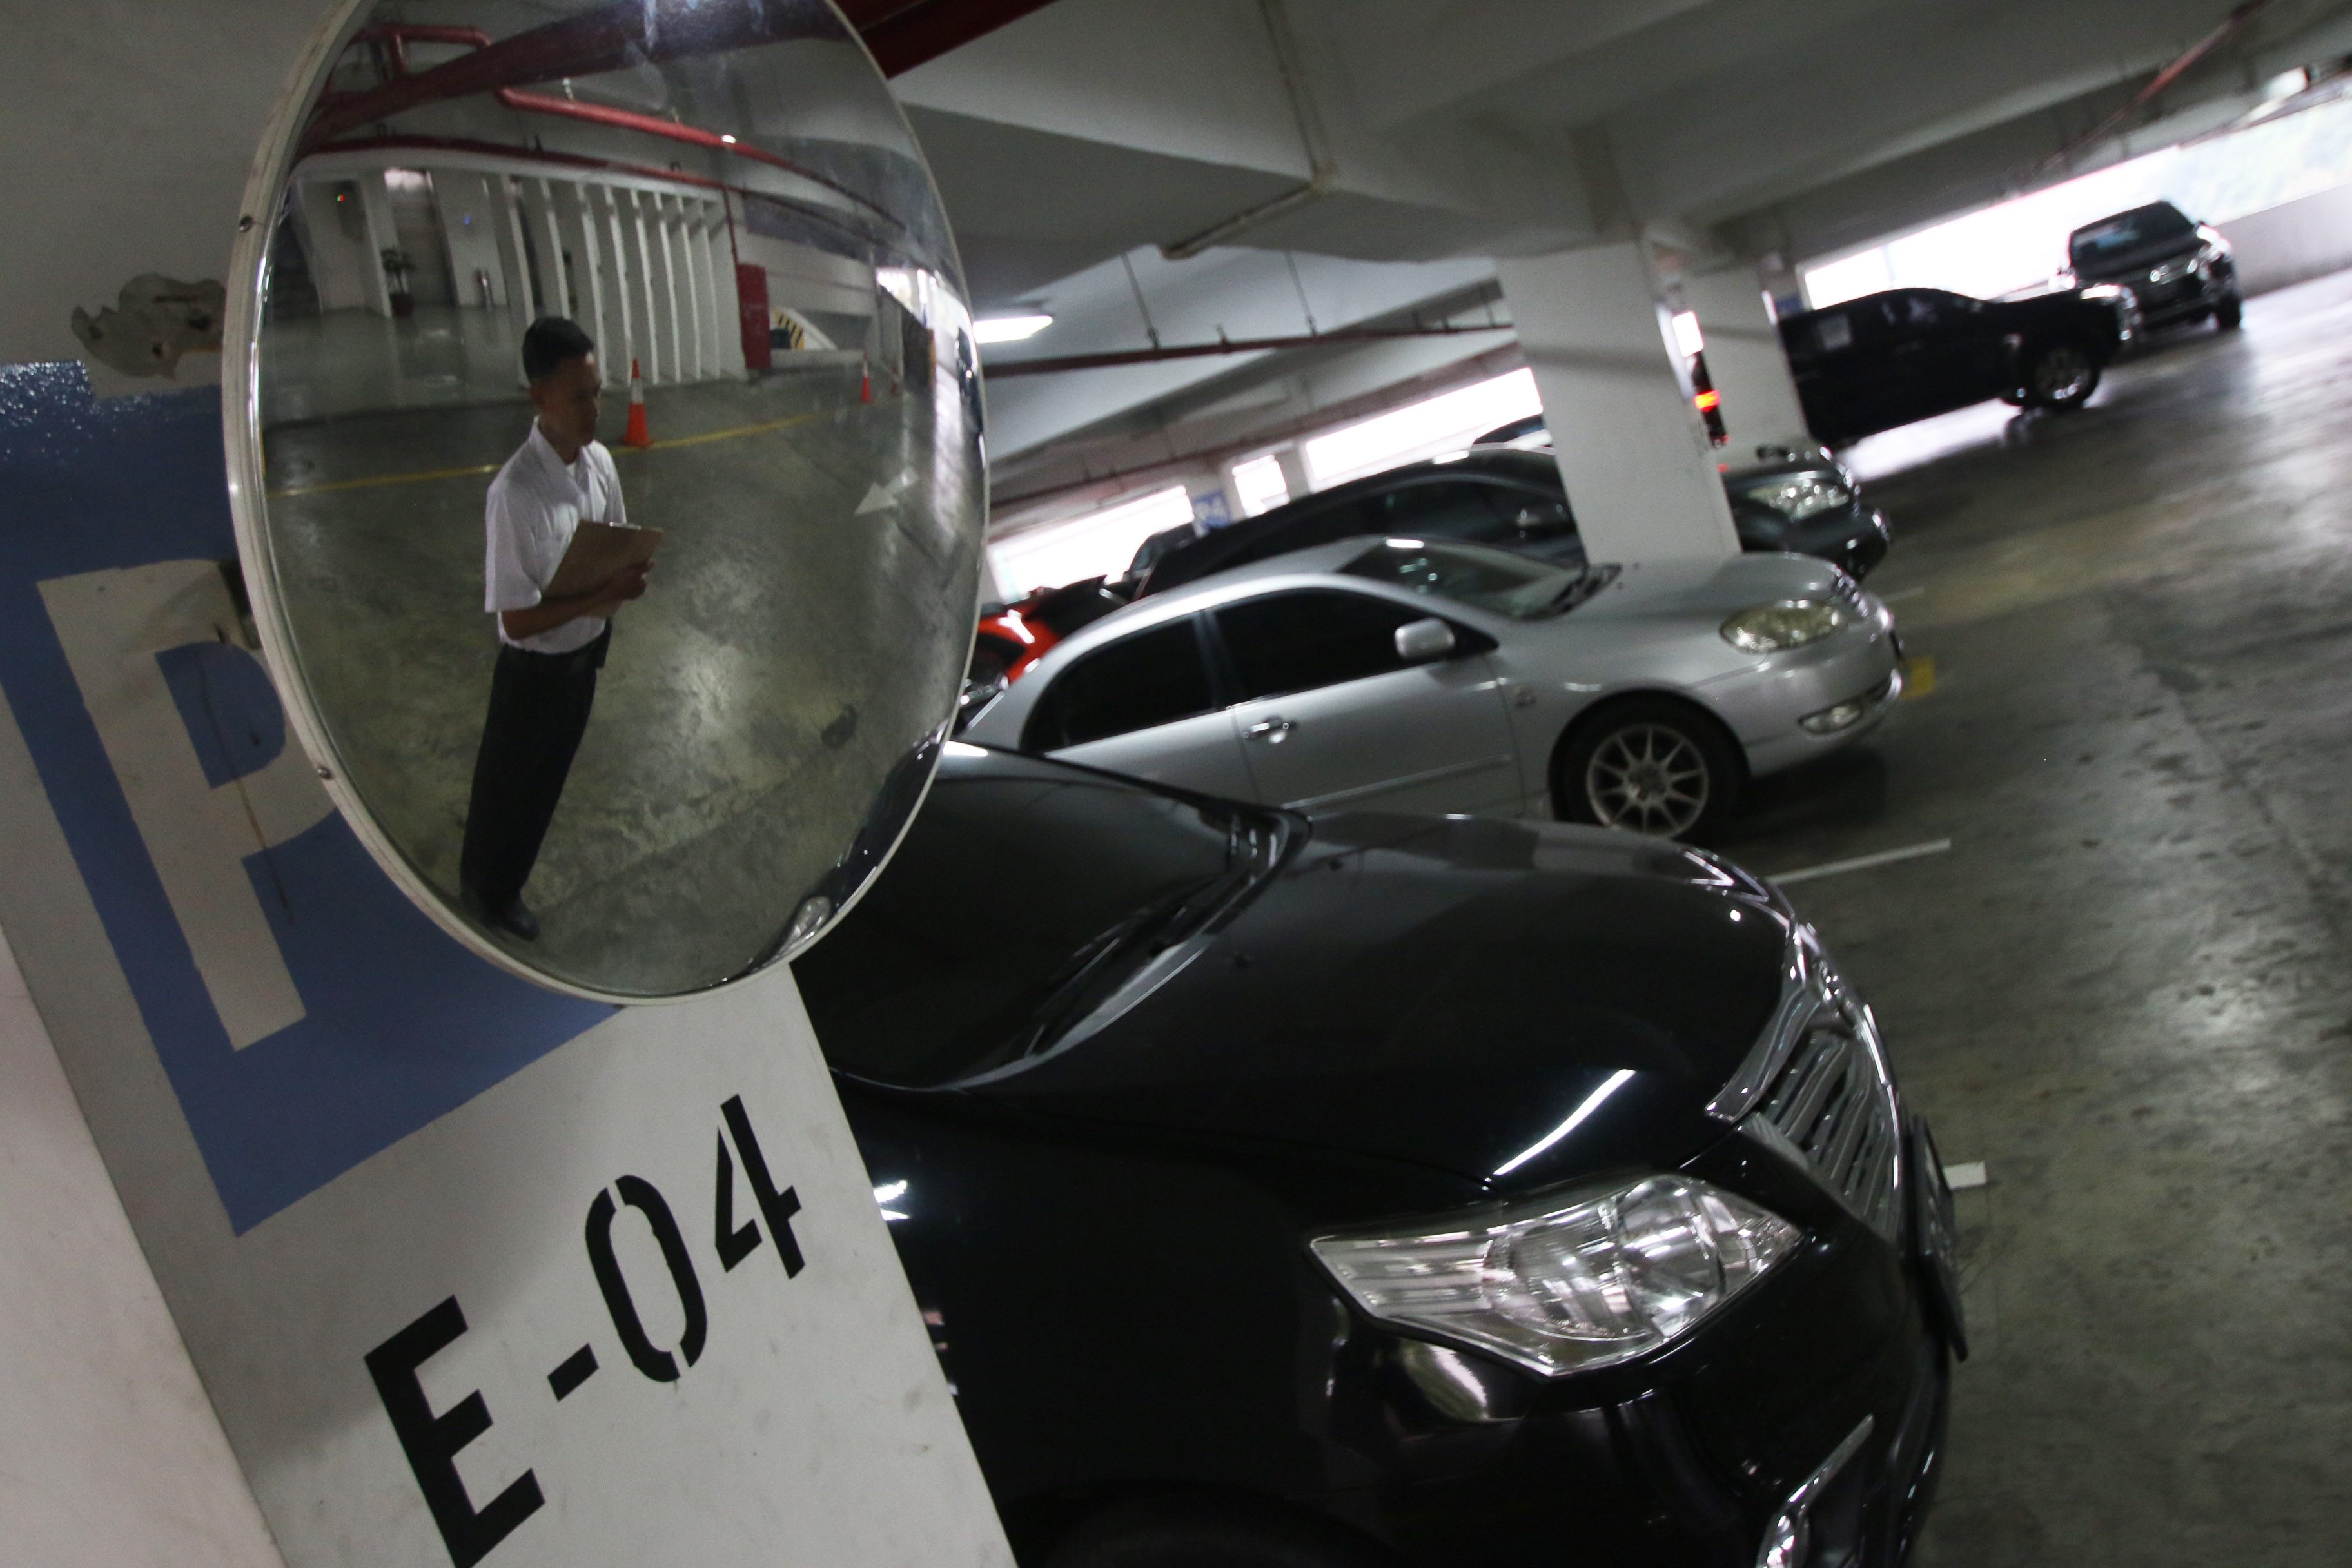 NOMOR POLISI. Petugas mencatat nomor polisi mobil yang terparkir di area gedung parkir Plaza Bank Mandiri, Jakarta, Jumat, 11 Agustus. Foto oleh Rivan Awal Lingga/ANTARA 